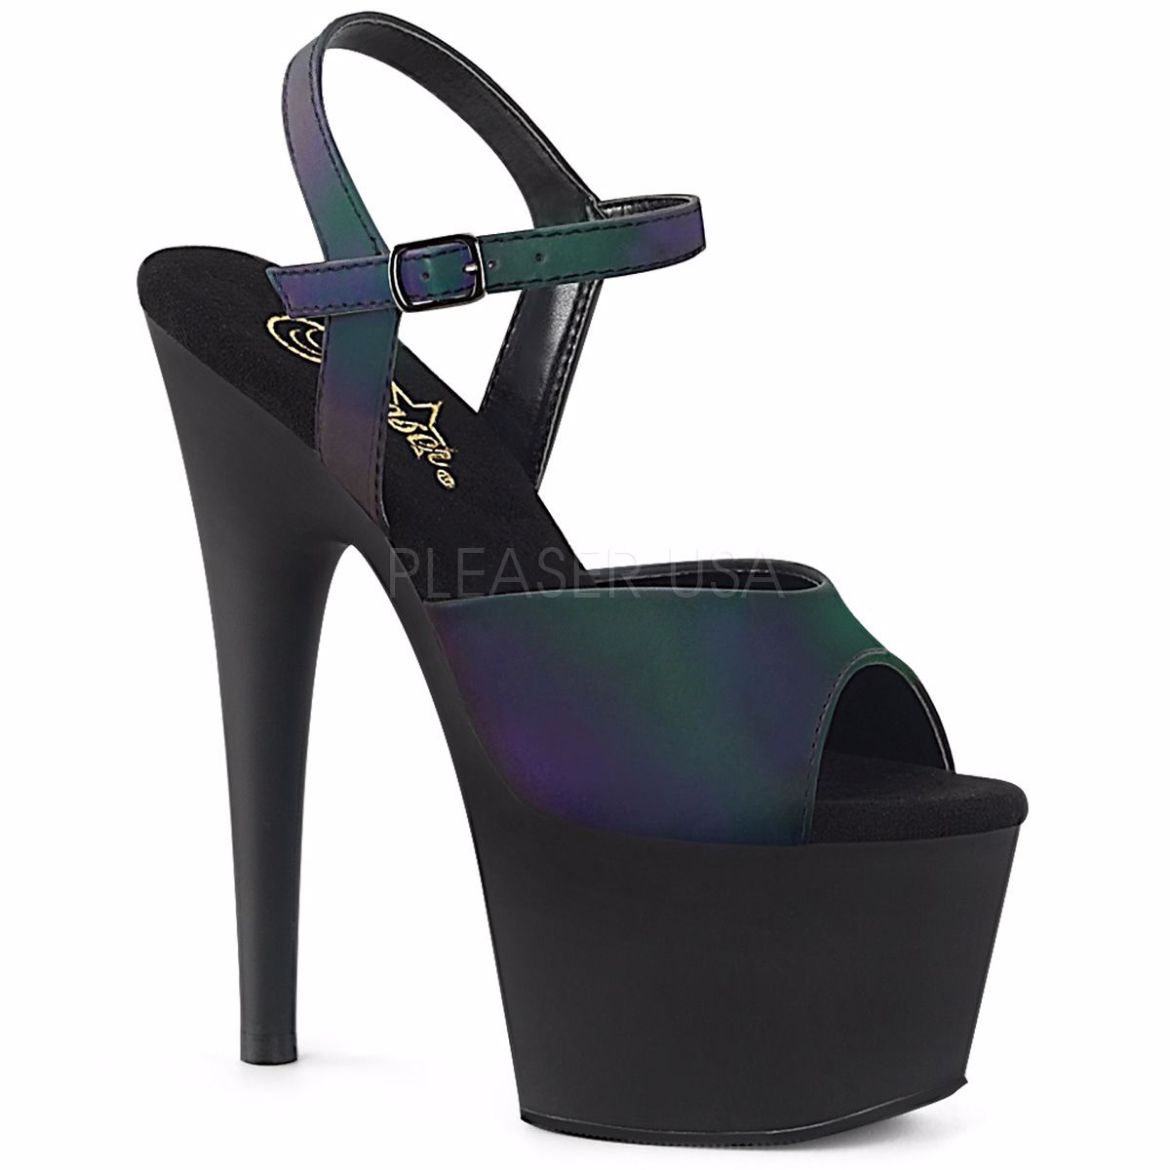 Product image of Pleaser ADORE-709REFL Green Multicolour Reflective/Black Matte 7 inch (17.8 cm) Heel 2 3/4 inch (7 cm) Platform Ankle Strap Sandal Shoes